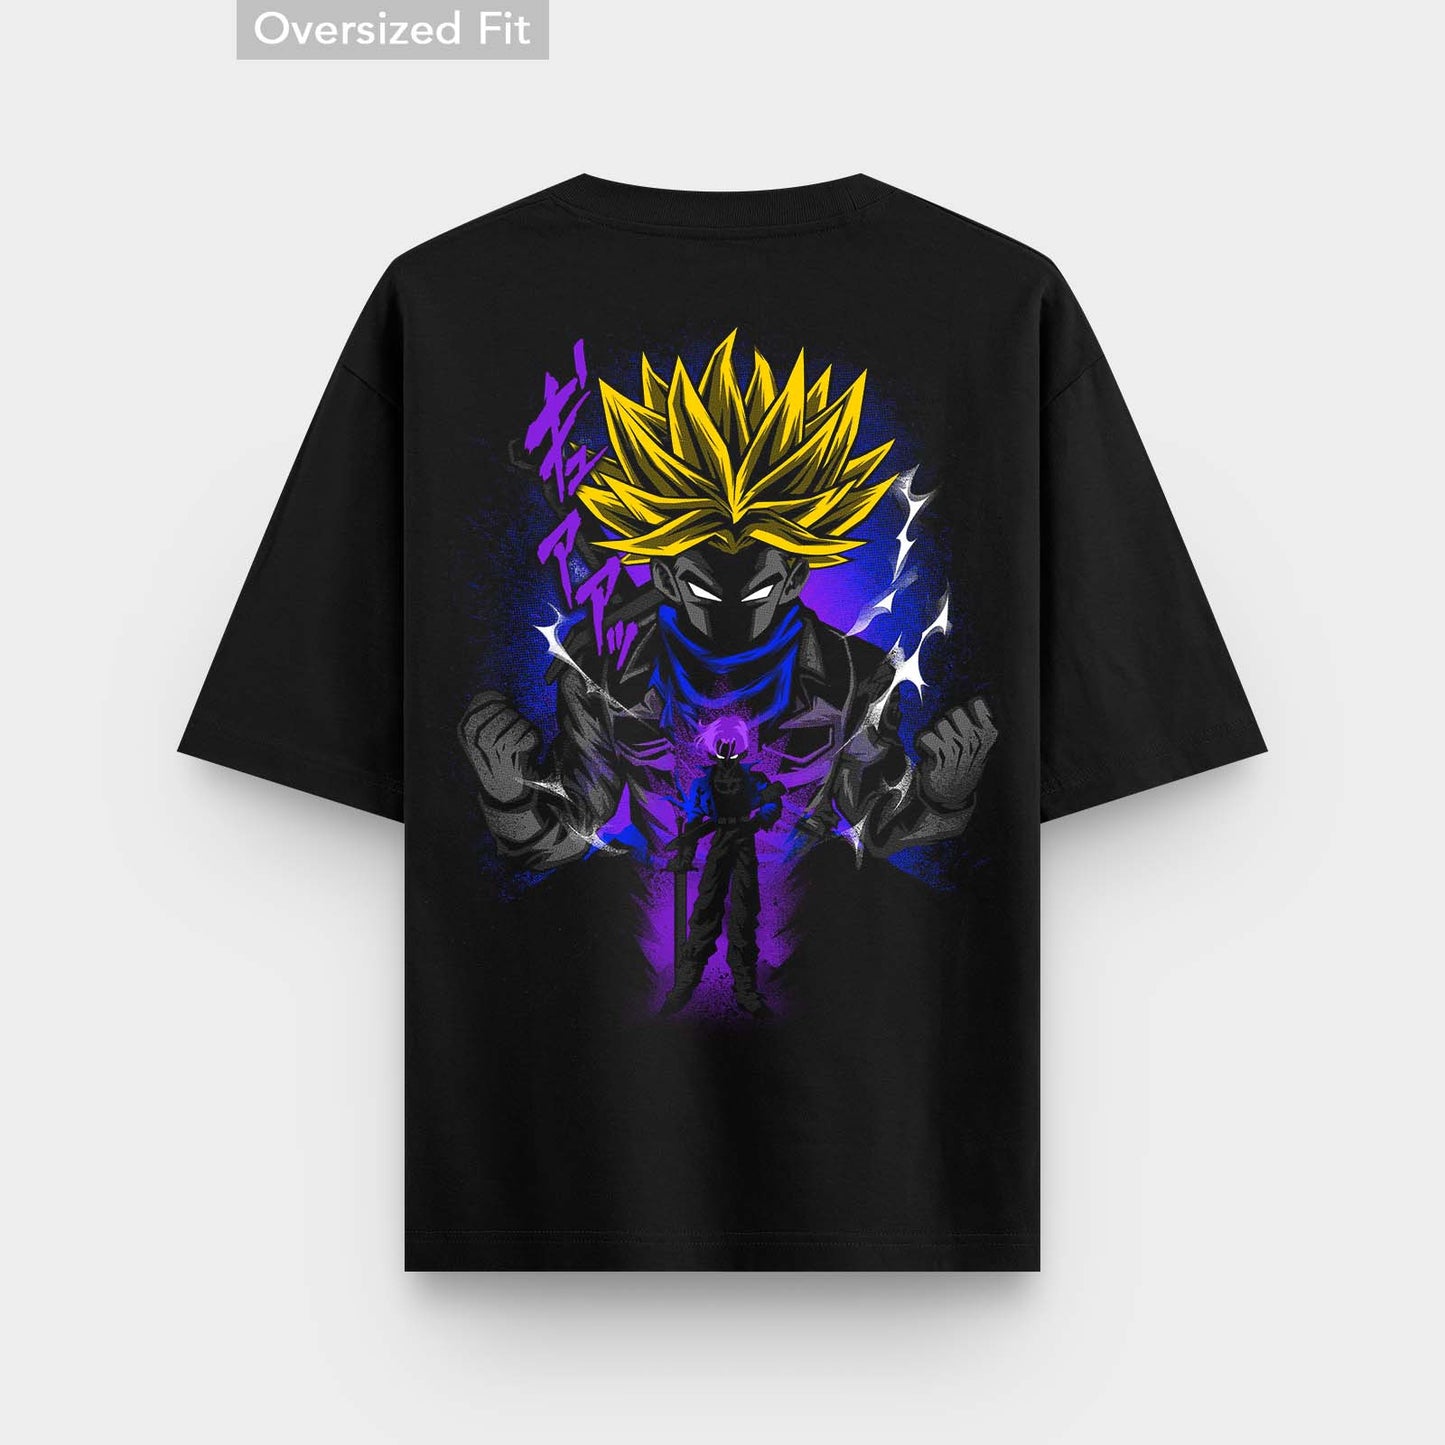 Son Goku Oversized T-Shirt for Dragon Ball Fans